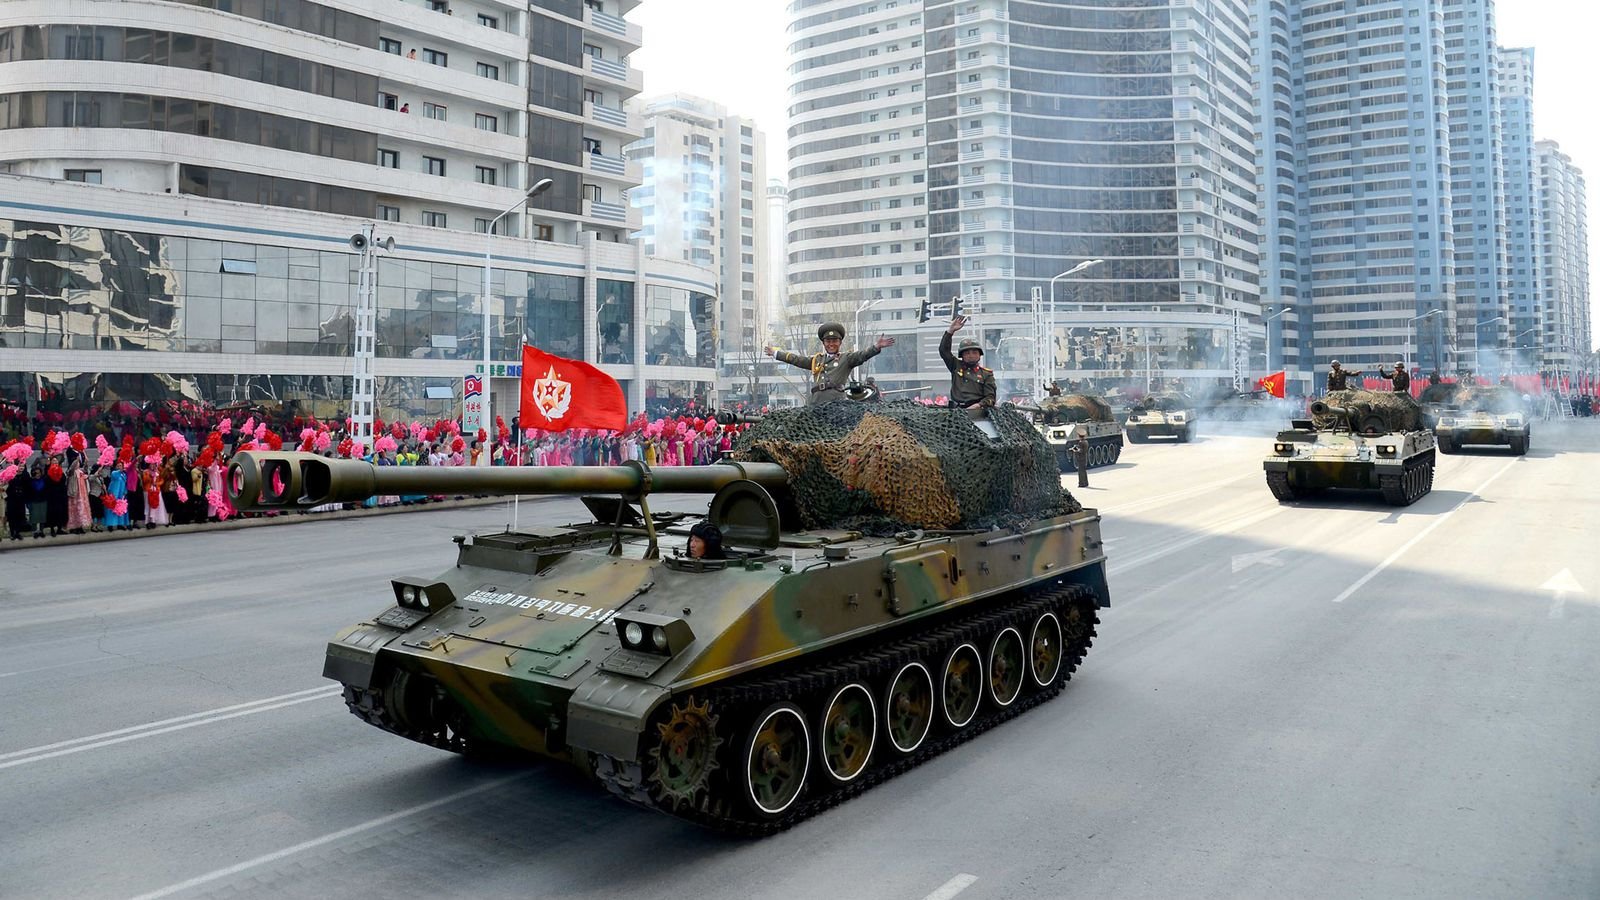 Новый танк северной кореи. Танк Сонгун-915. Северокорейские танки Сонгун-915. Танк КНДР Сонгун. Сонгун-915 основной боевой танк.